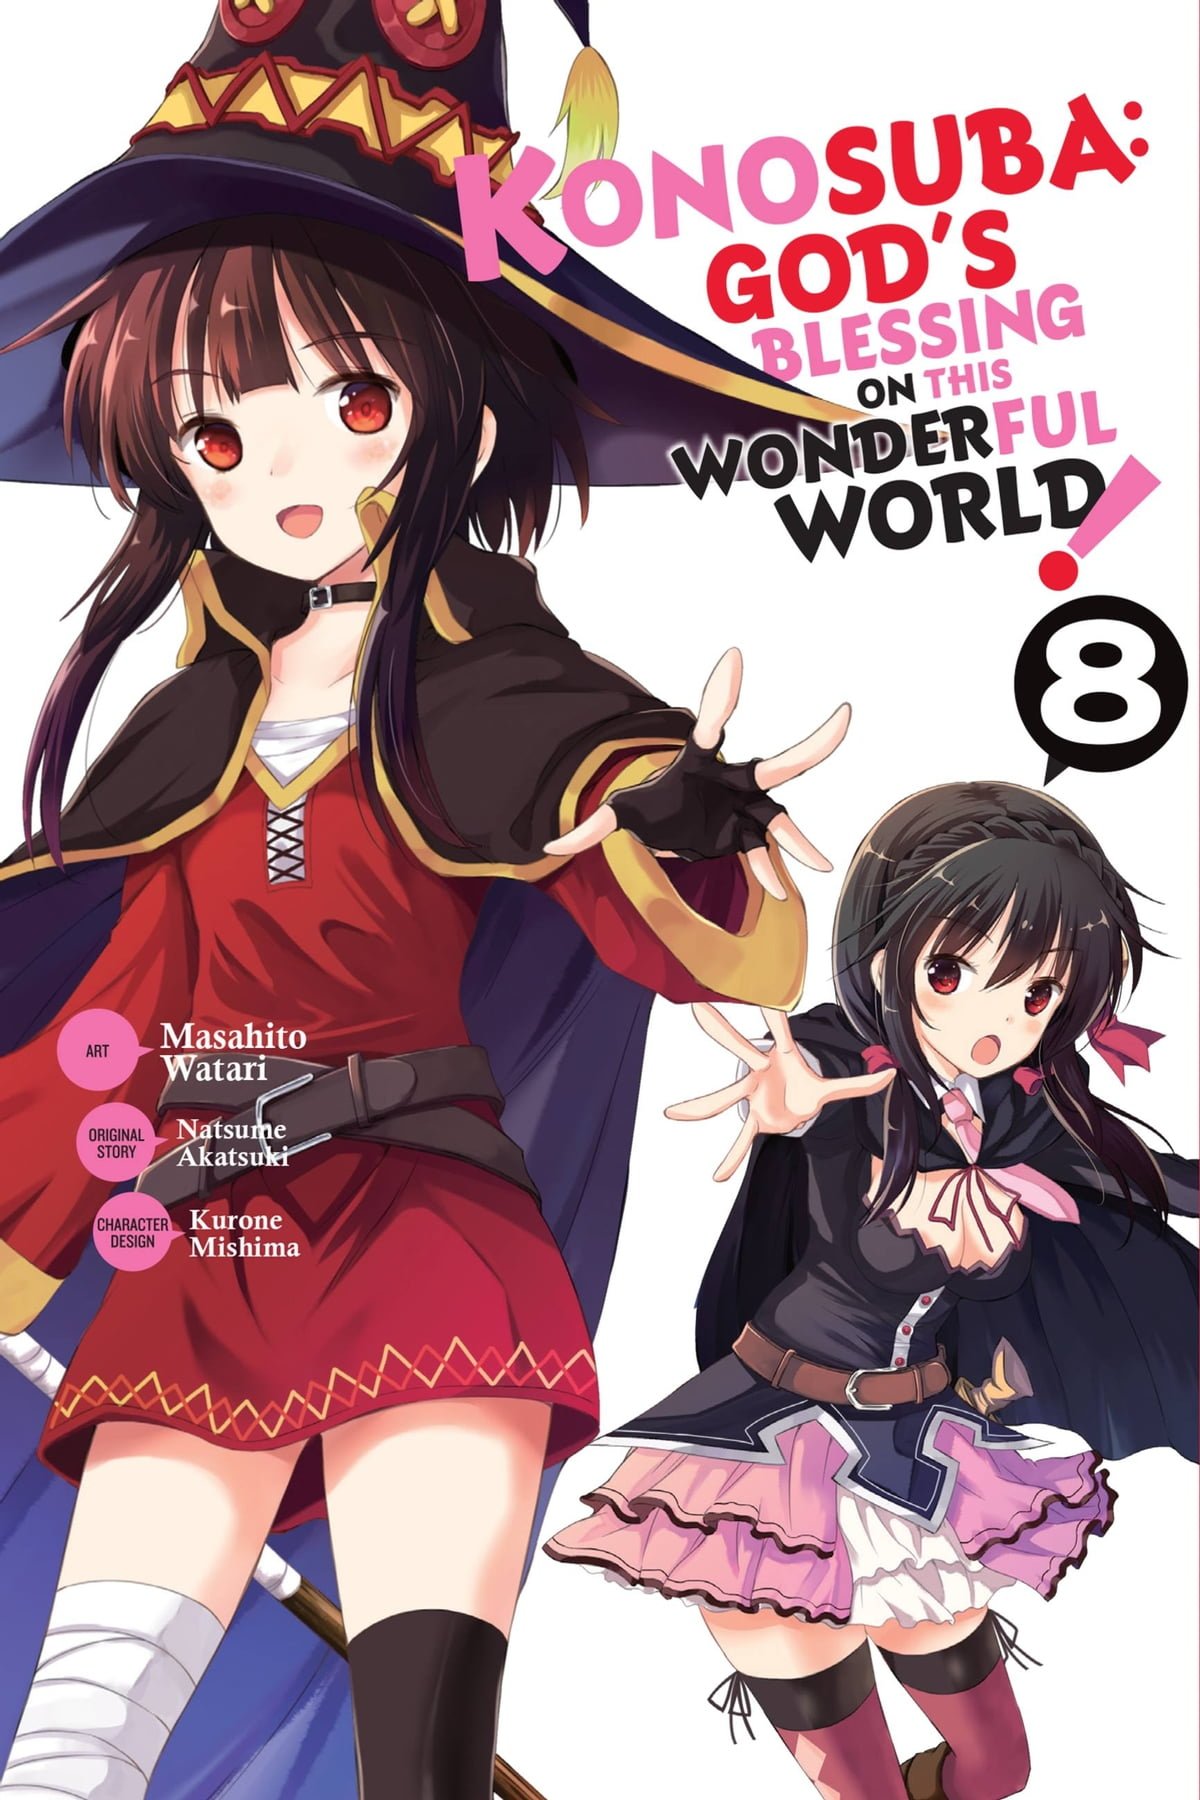 KONOSUBA! – THIS WONDERFUL WORLD 8, tra le novità Planet Manga di Maggio 2022